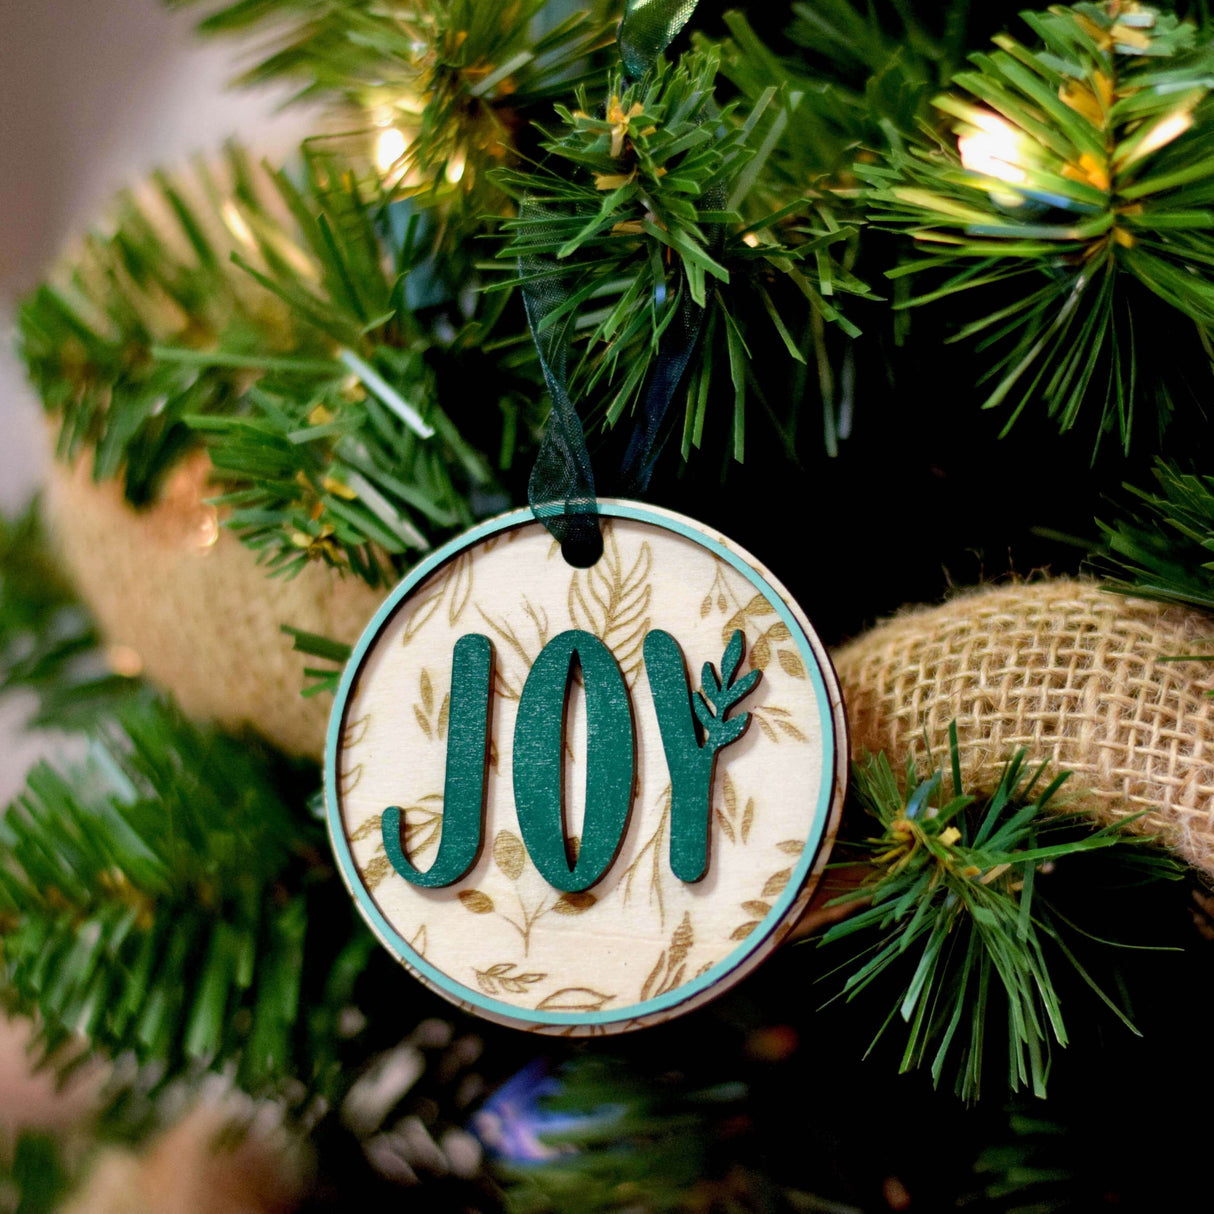 Joy Wood Engraved Ornament $10.99 Winks Design Studio,LLC